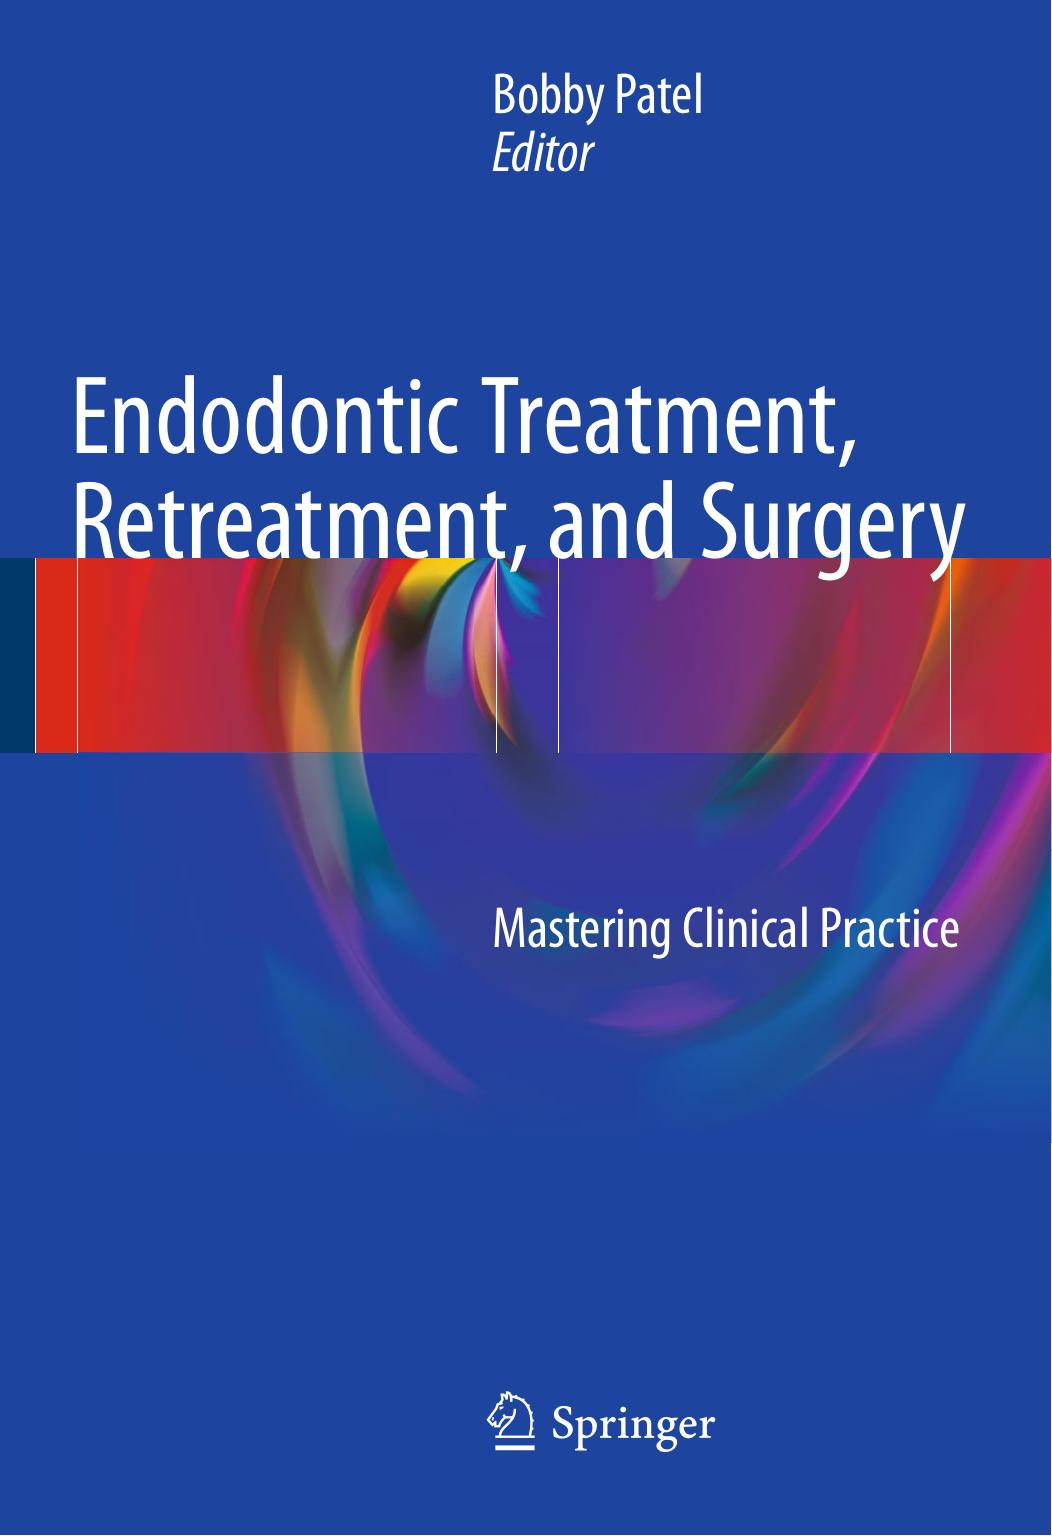 Endodontic Treatment, Retreatment 2016